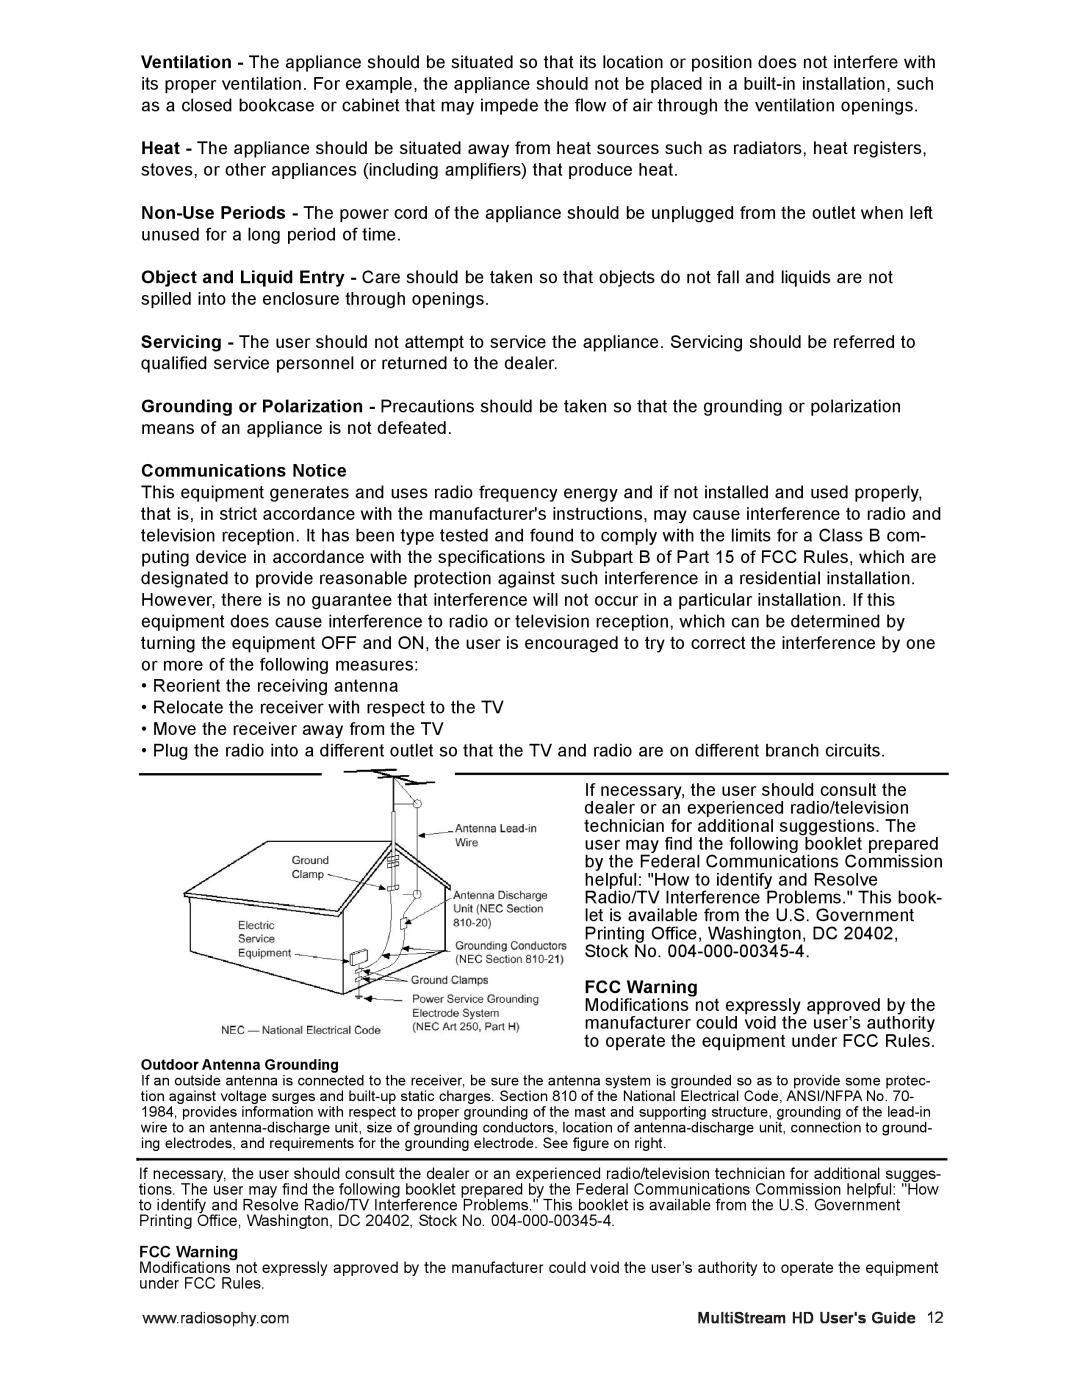 RCA MPA0001 manual Communications Notice, FCC Warning 